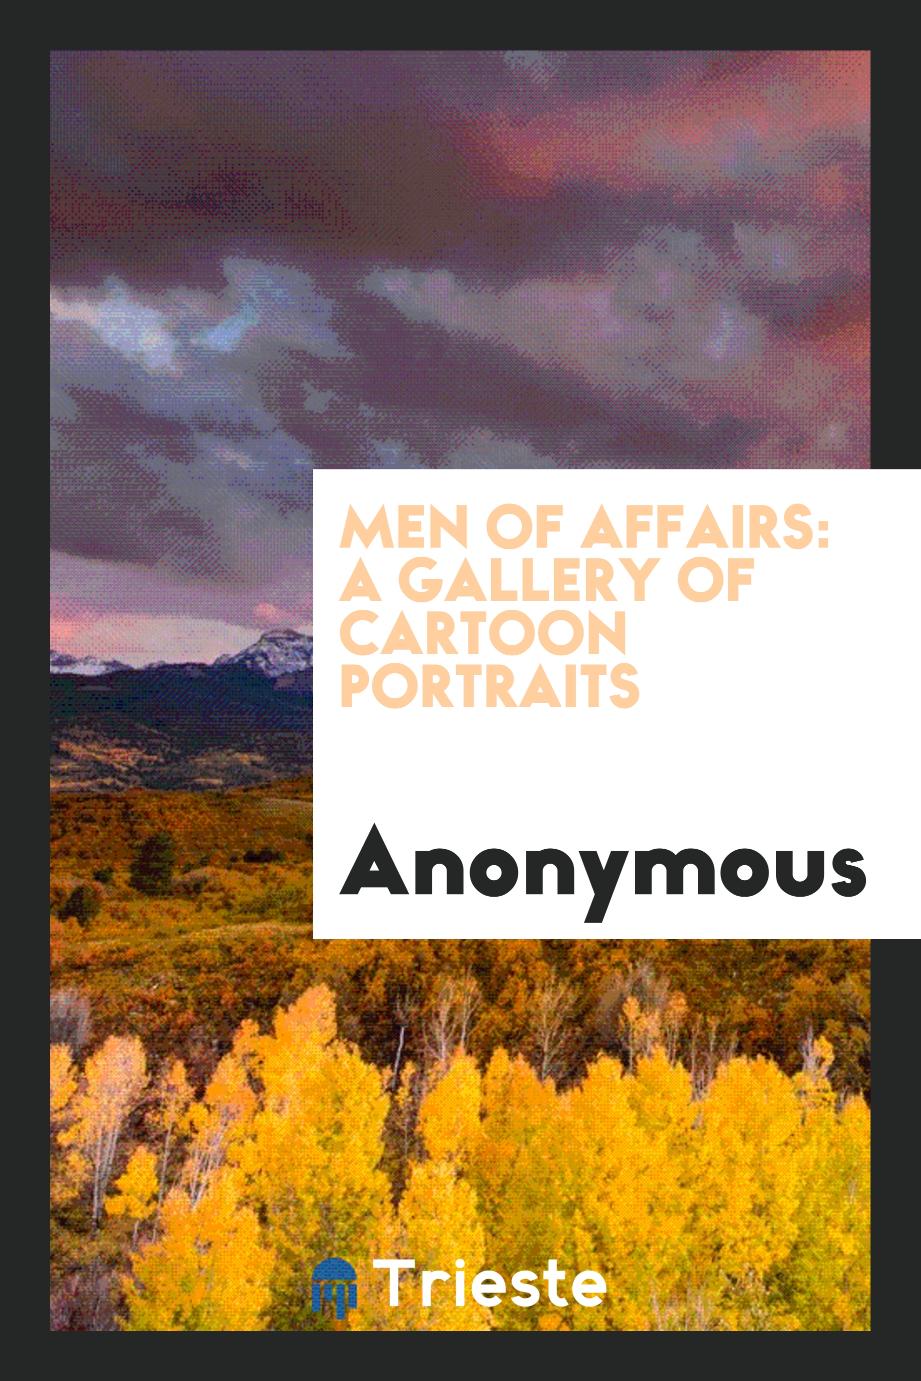 Men of affairs: a gallery of cartoon portraits